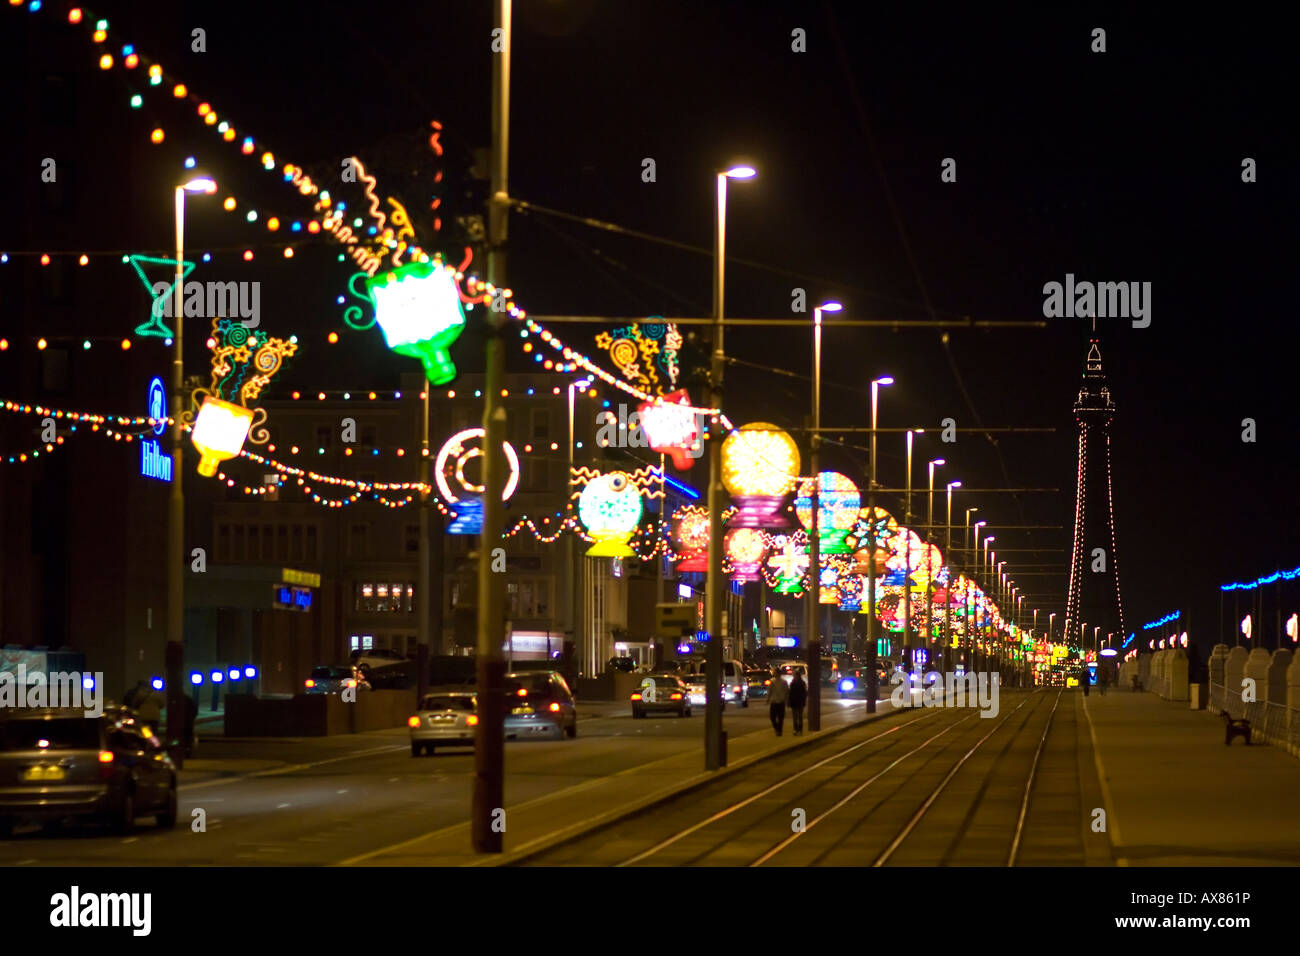 Illuminations on the Promenade Stock Photo